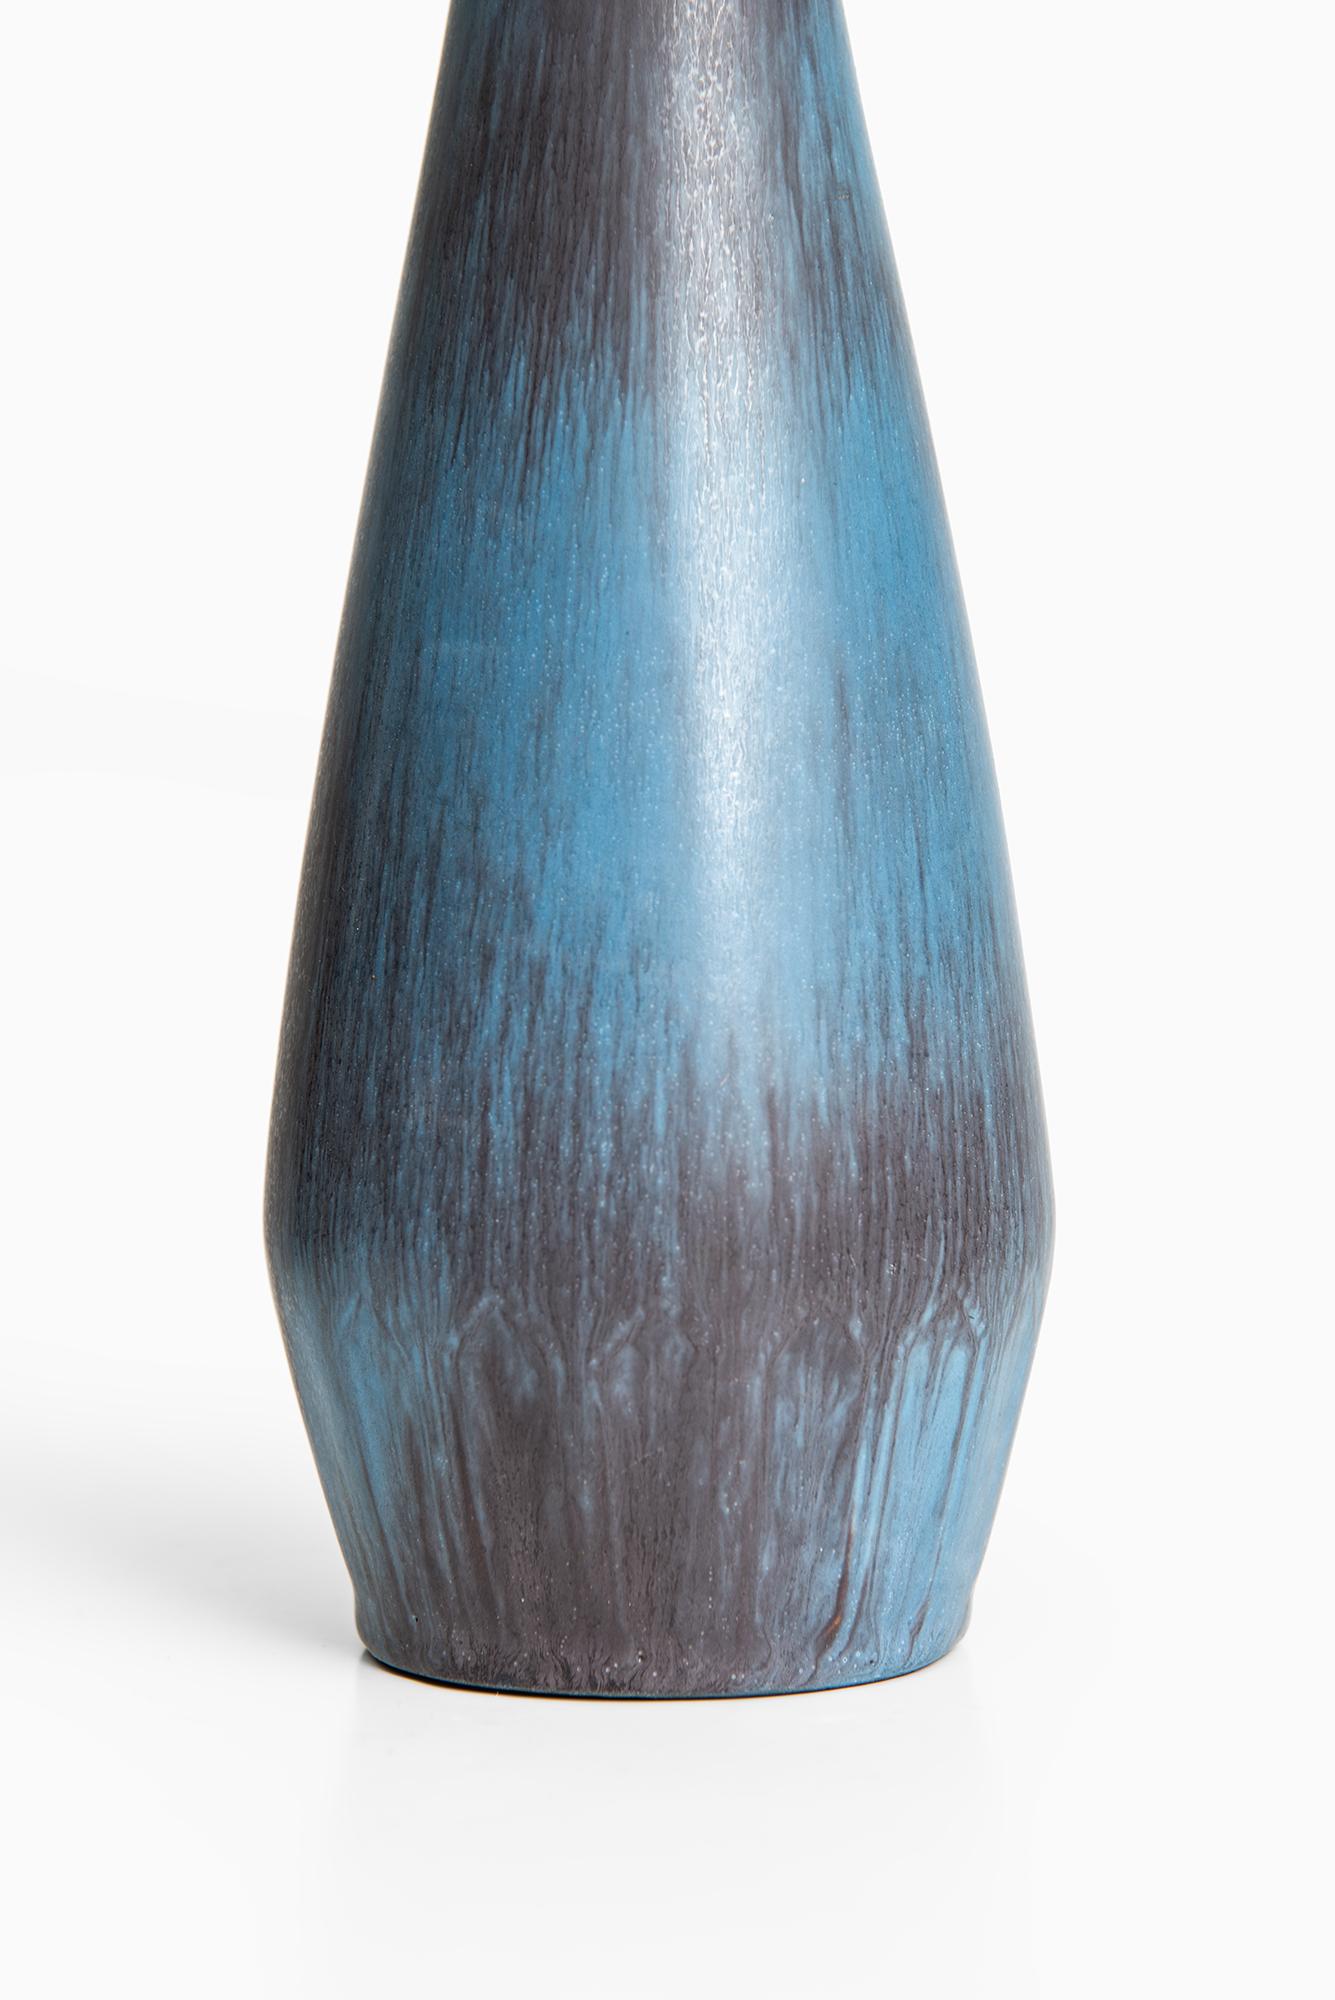 Swedish Gunnar Nylund Ceramic Vase by Rörstrand in Sweden For Sale